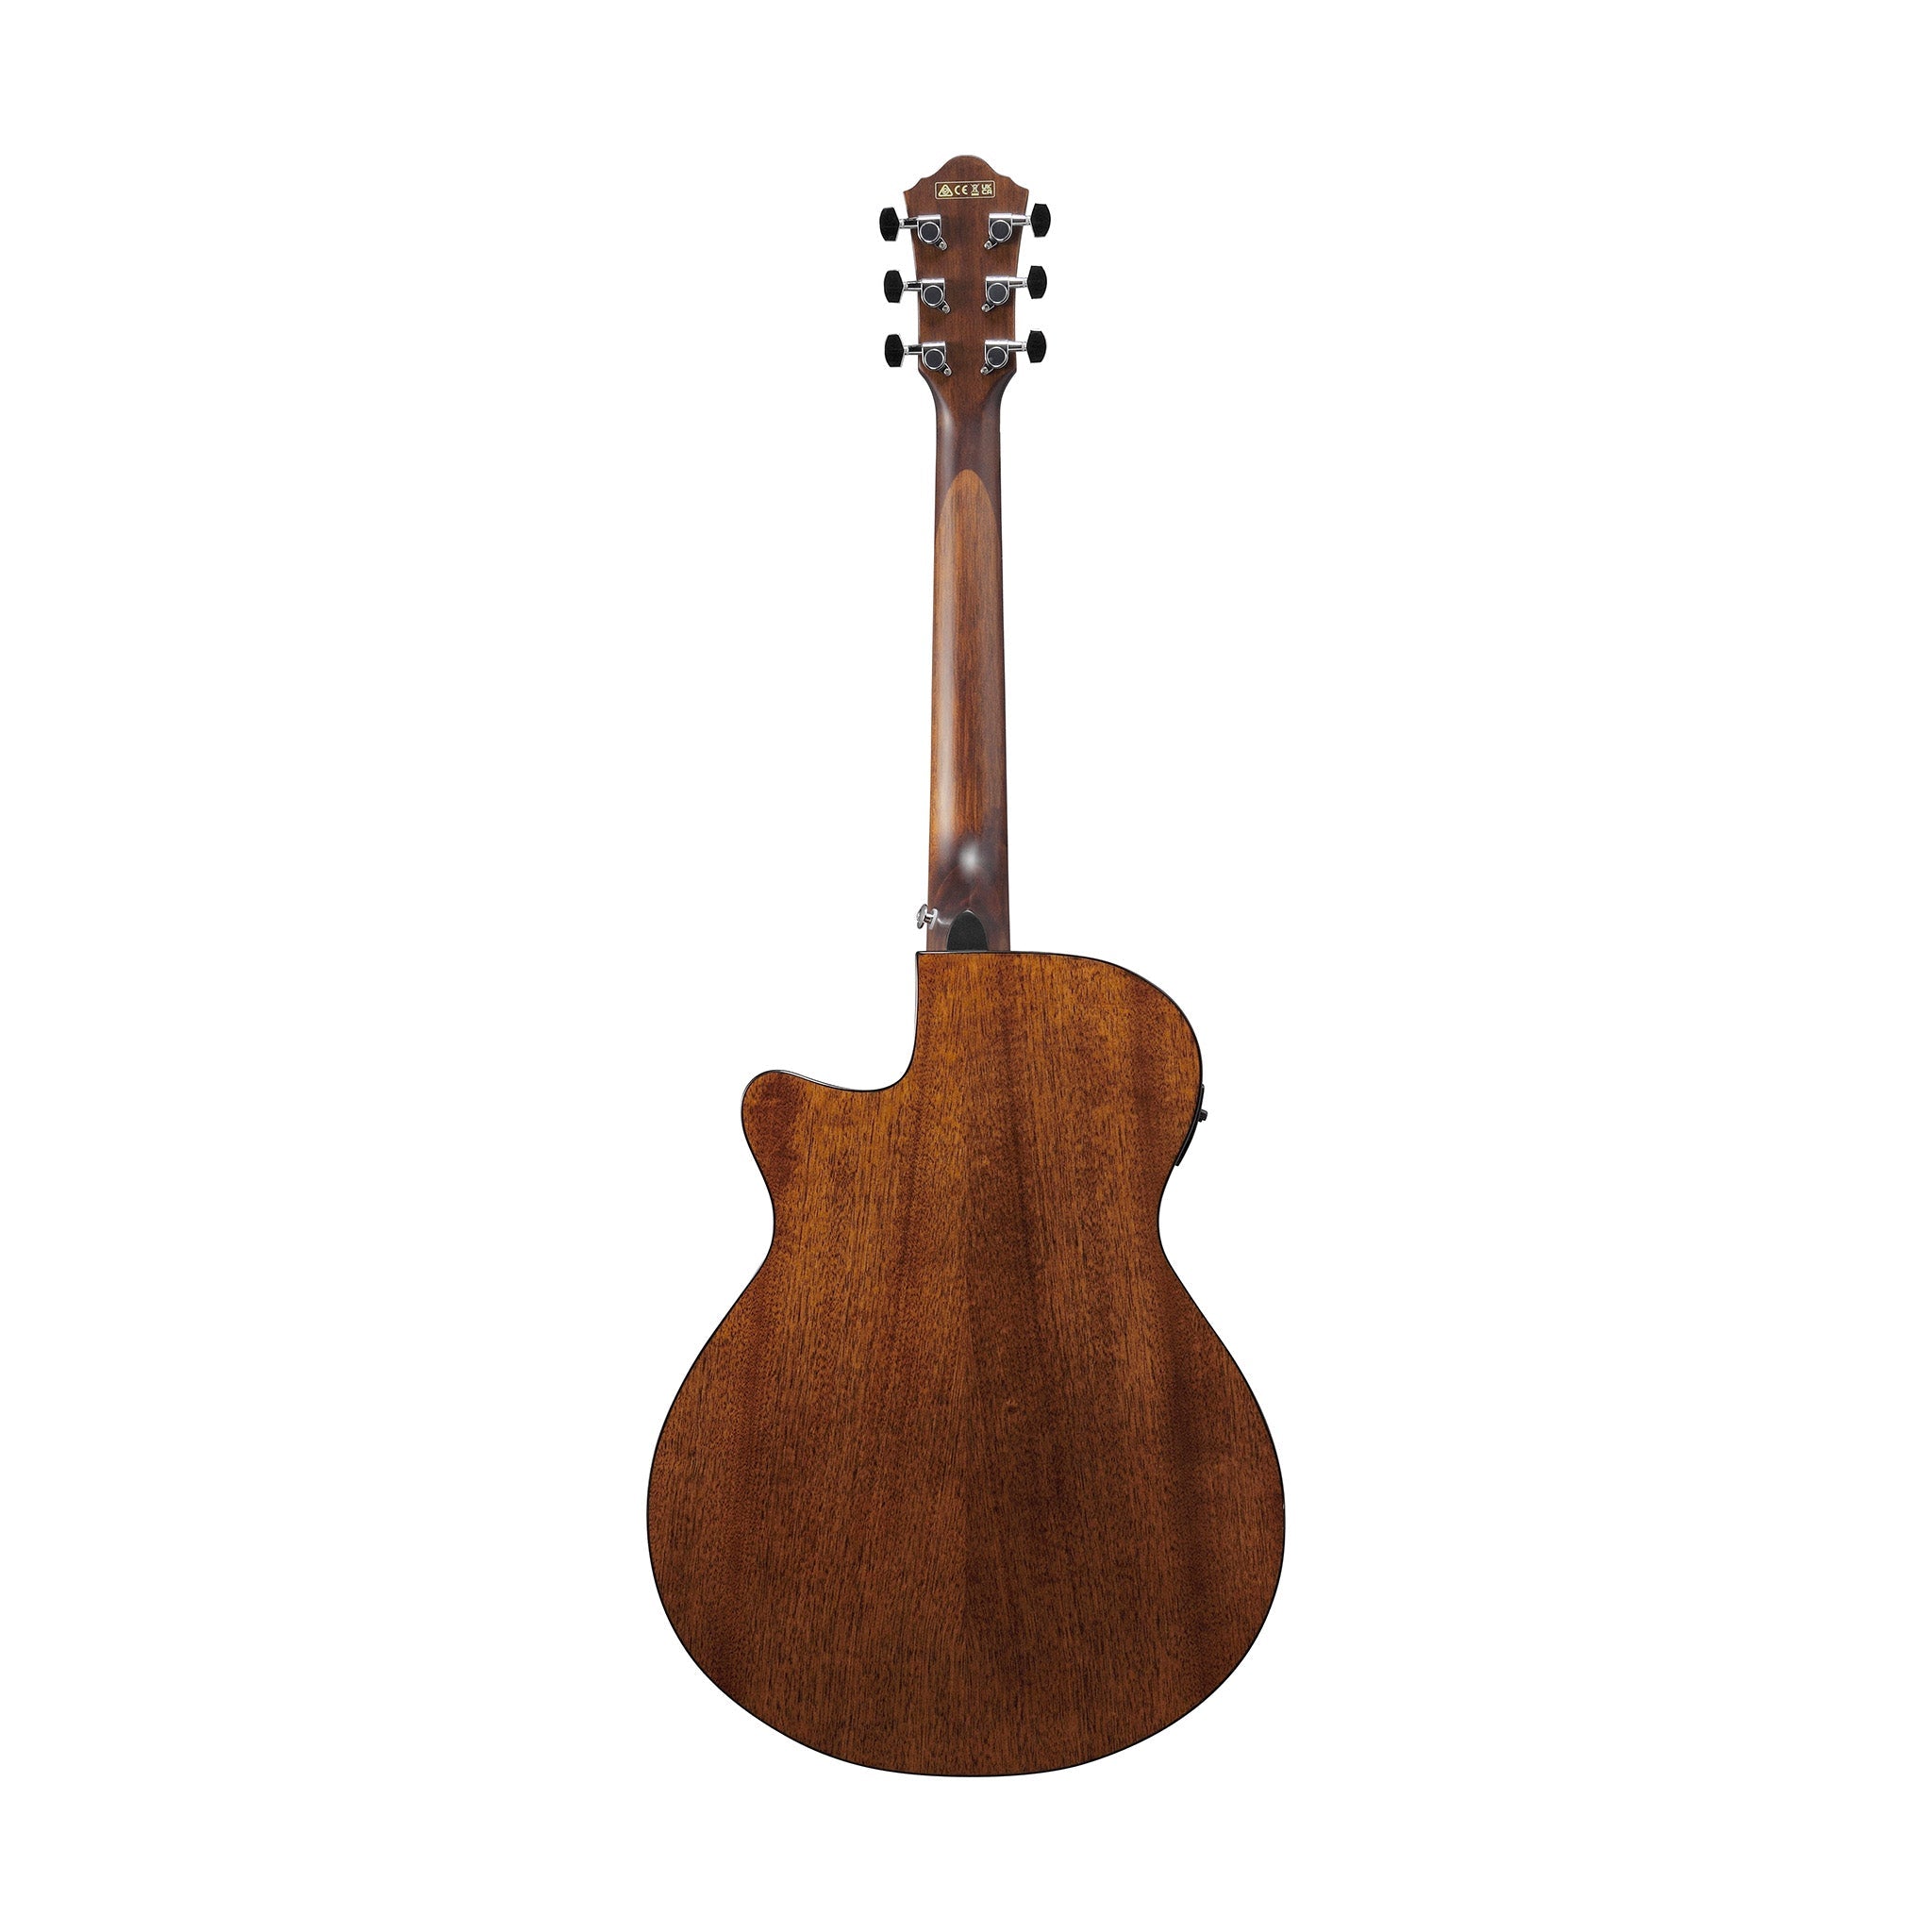 Ibanez AEG61 Acoustic Guitar - Natural Mahogany High Gloss (AEG61-NMH)